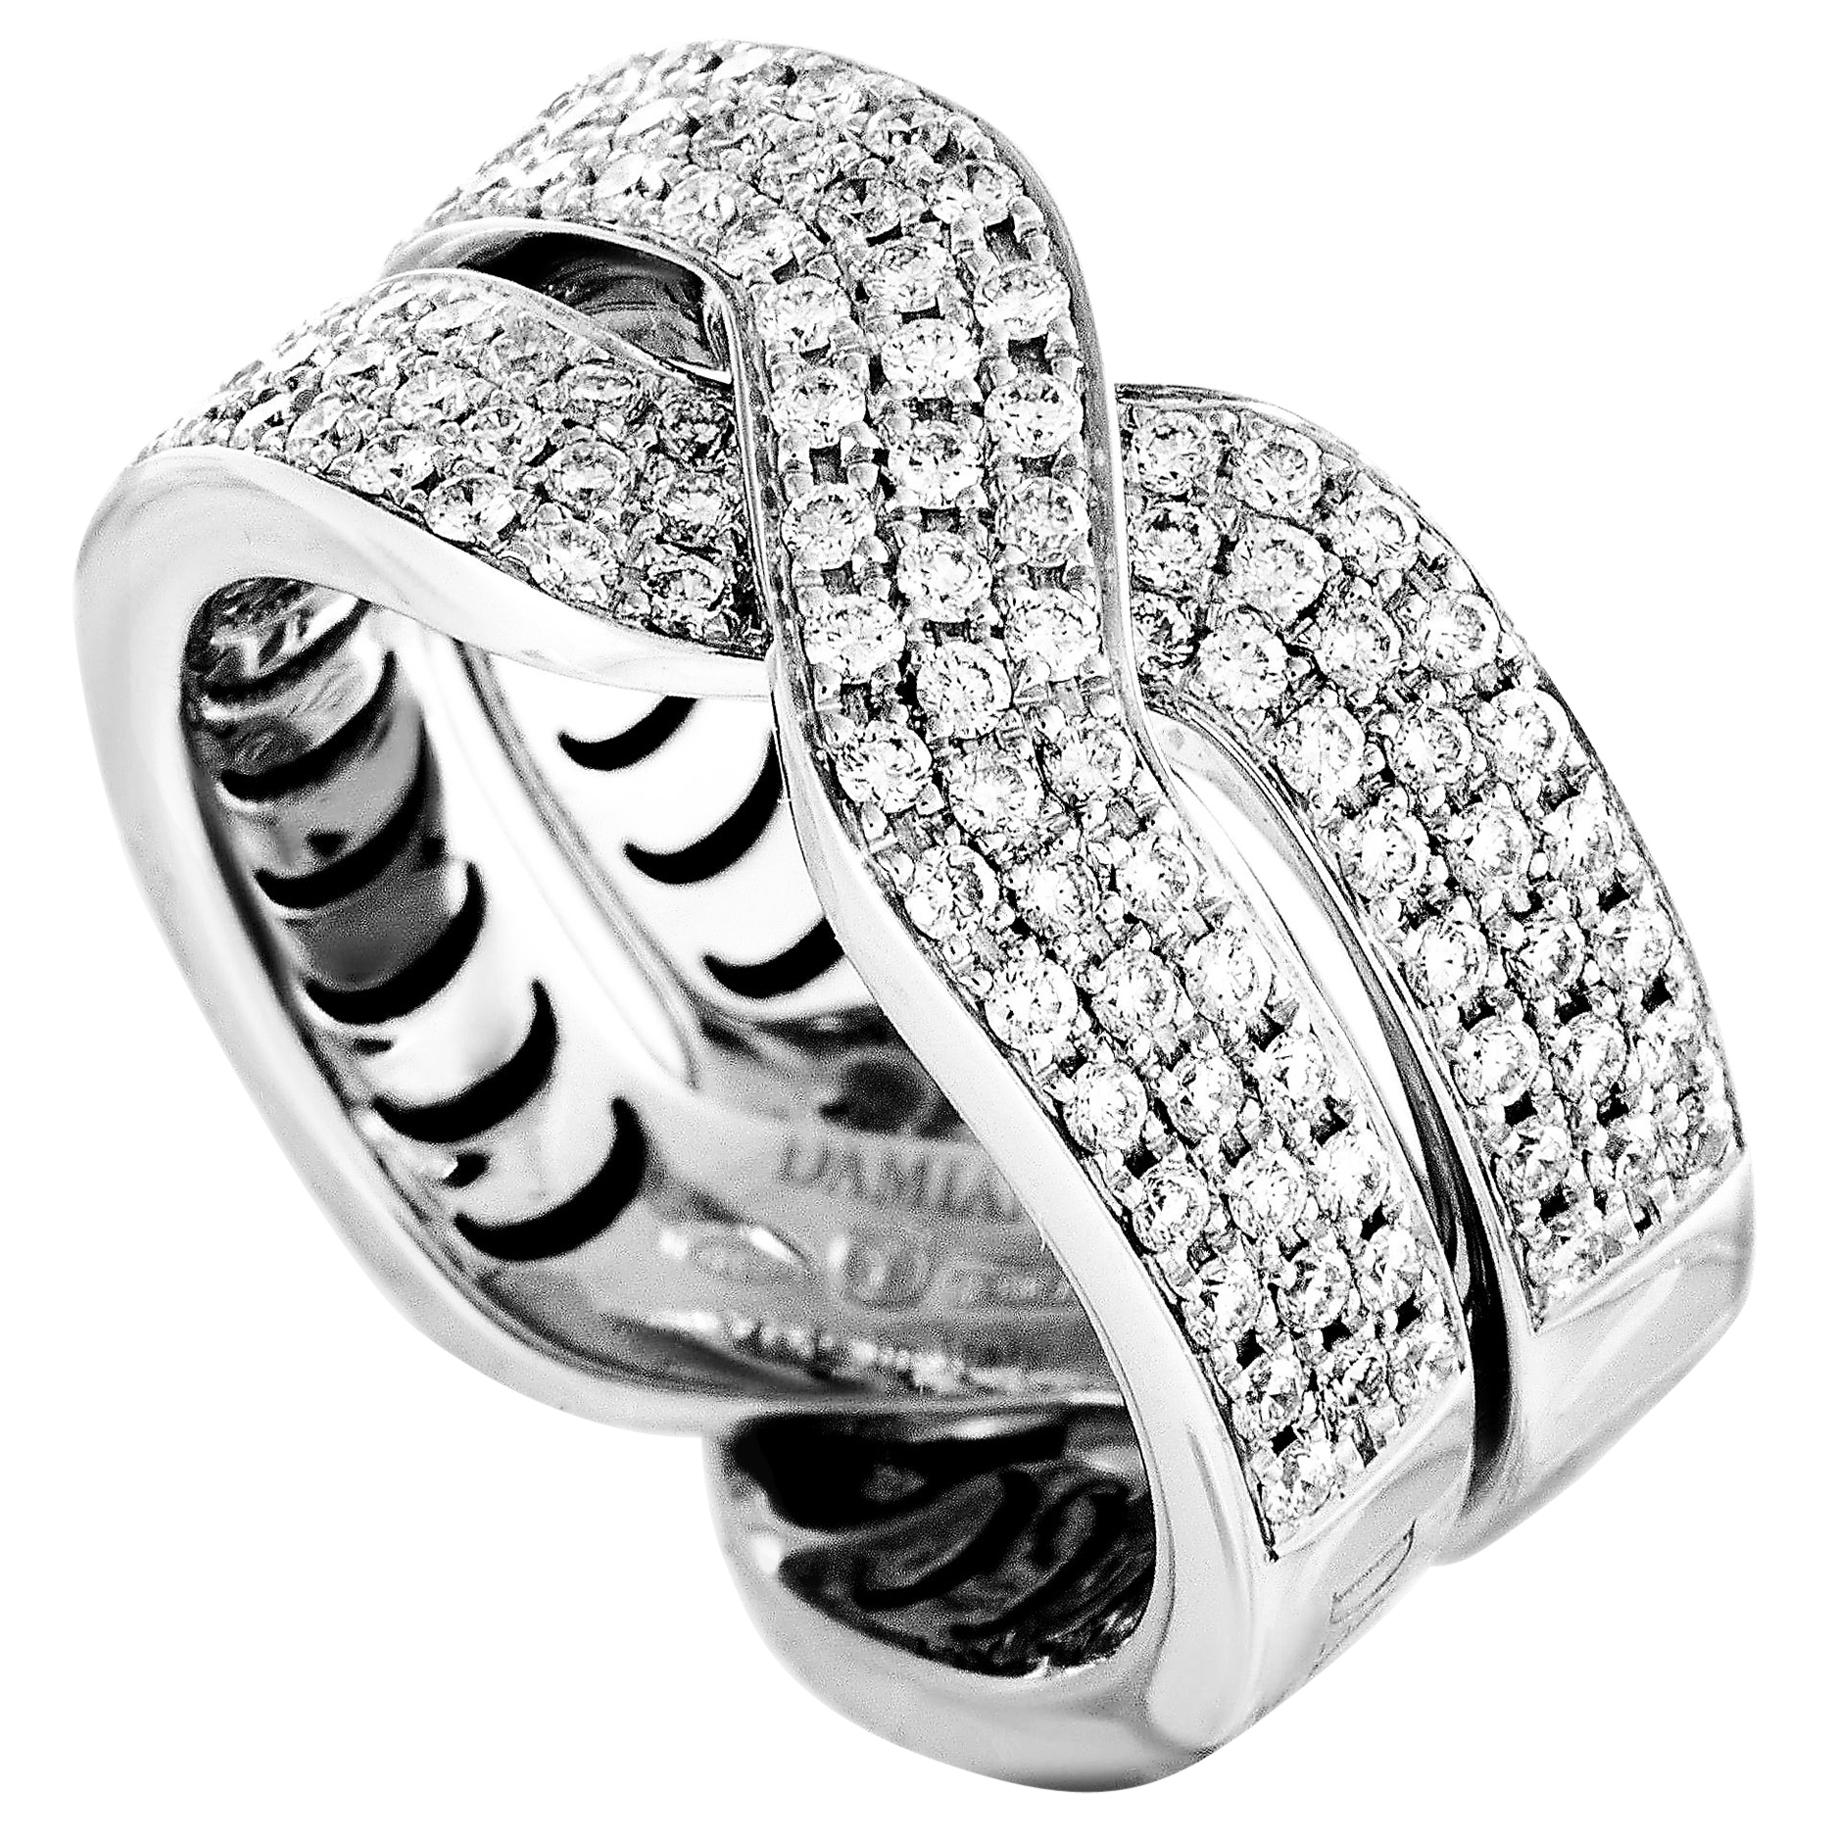 Damiani Abbraccio 18 Karat White Gold Diamond Pave Crisscross Ring